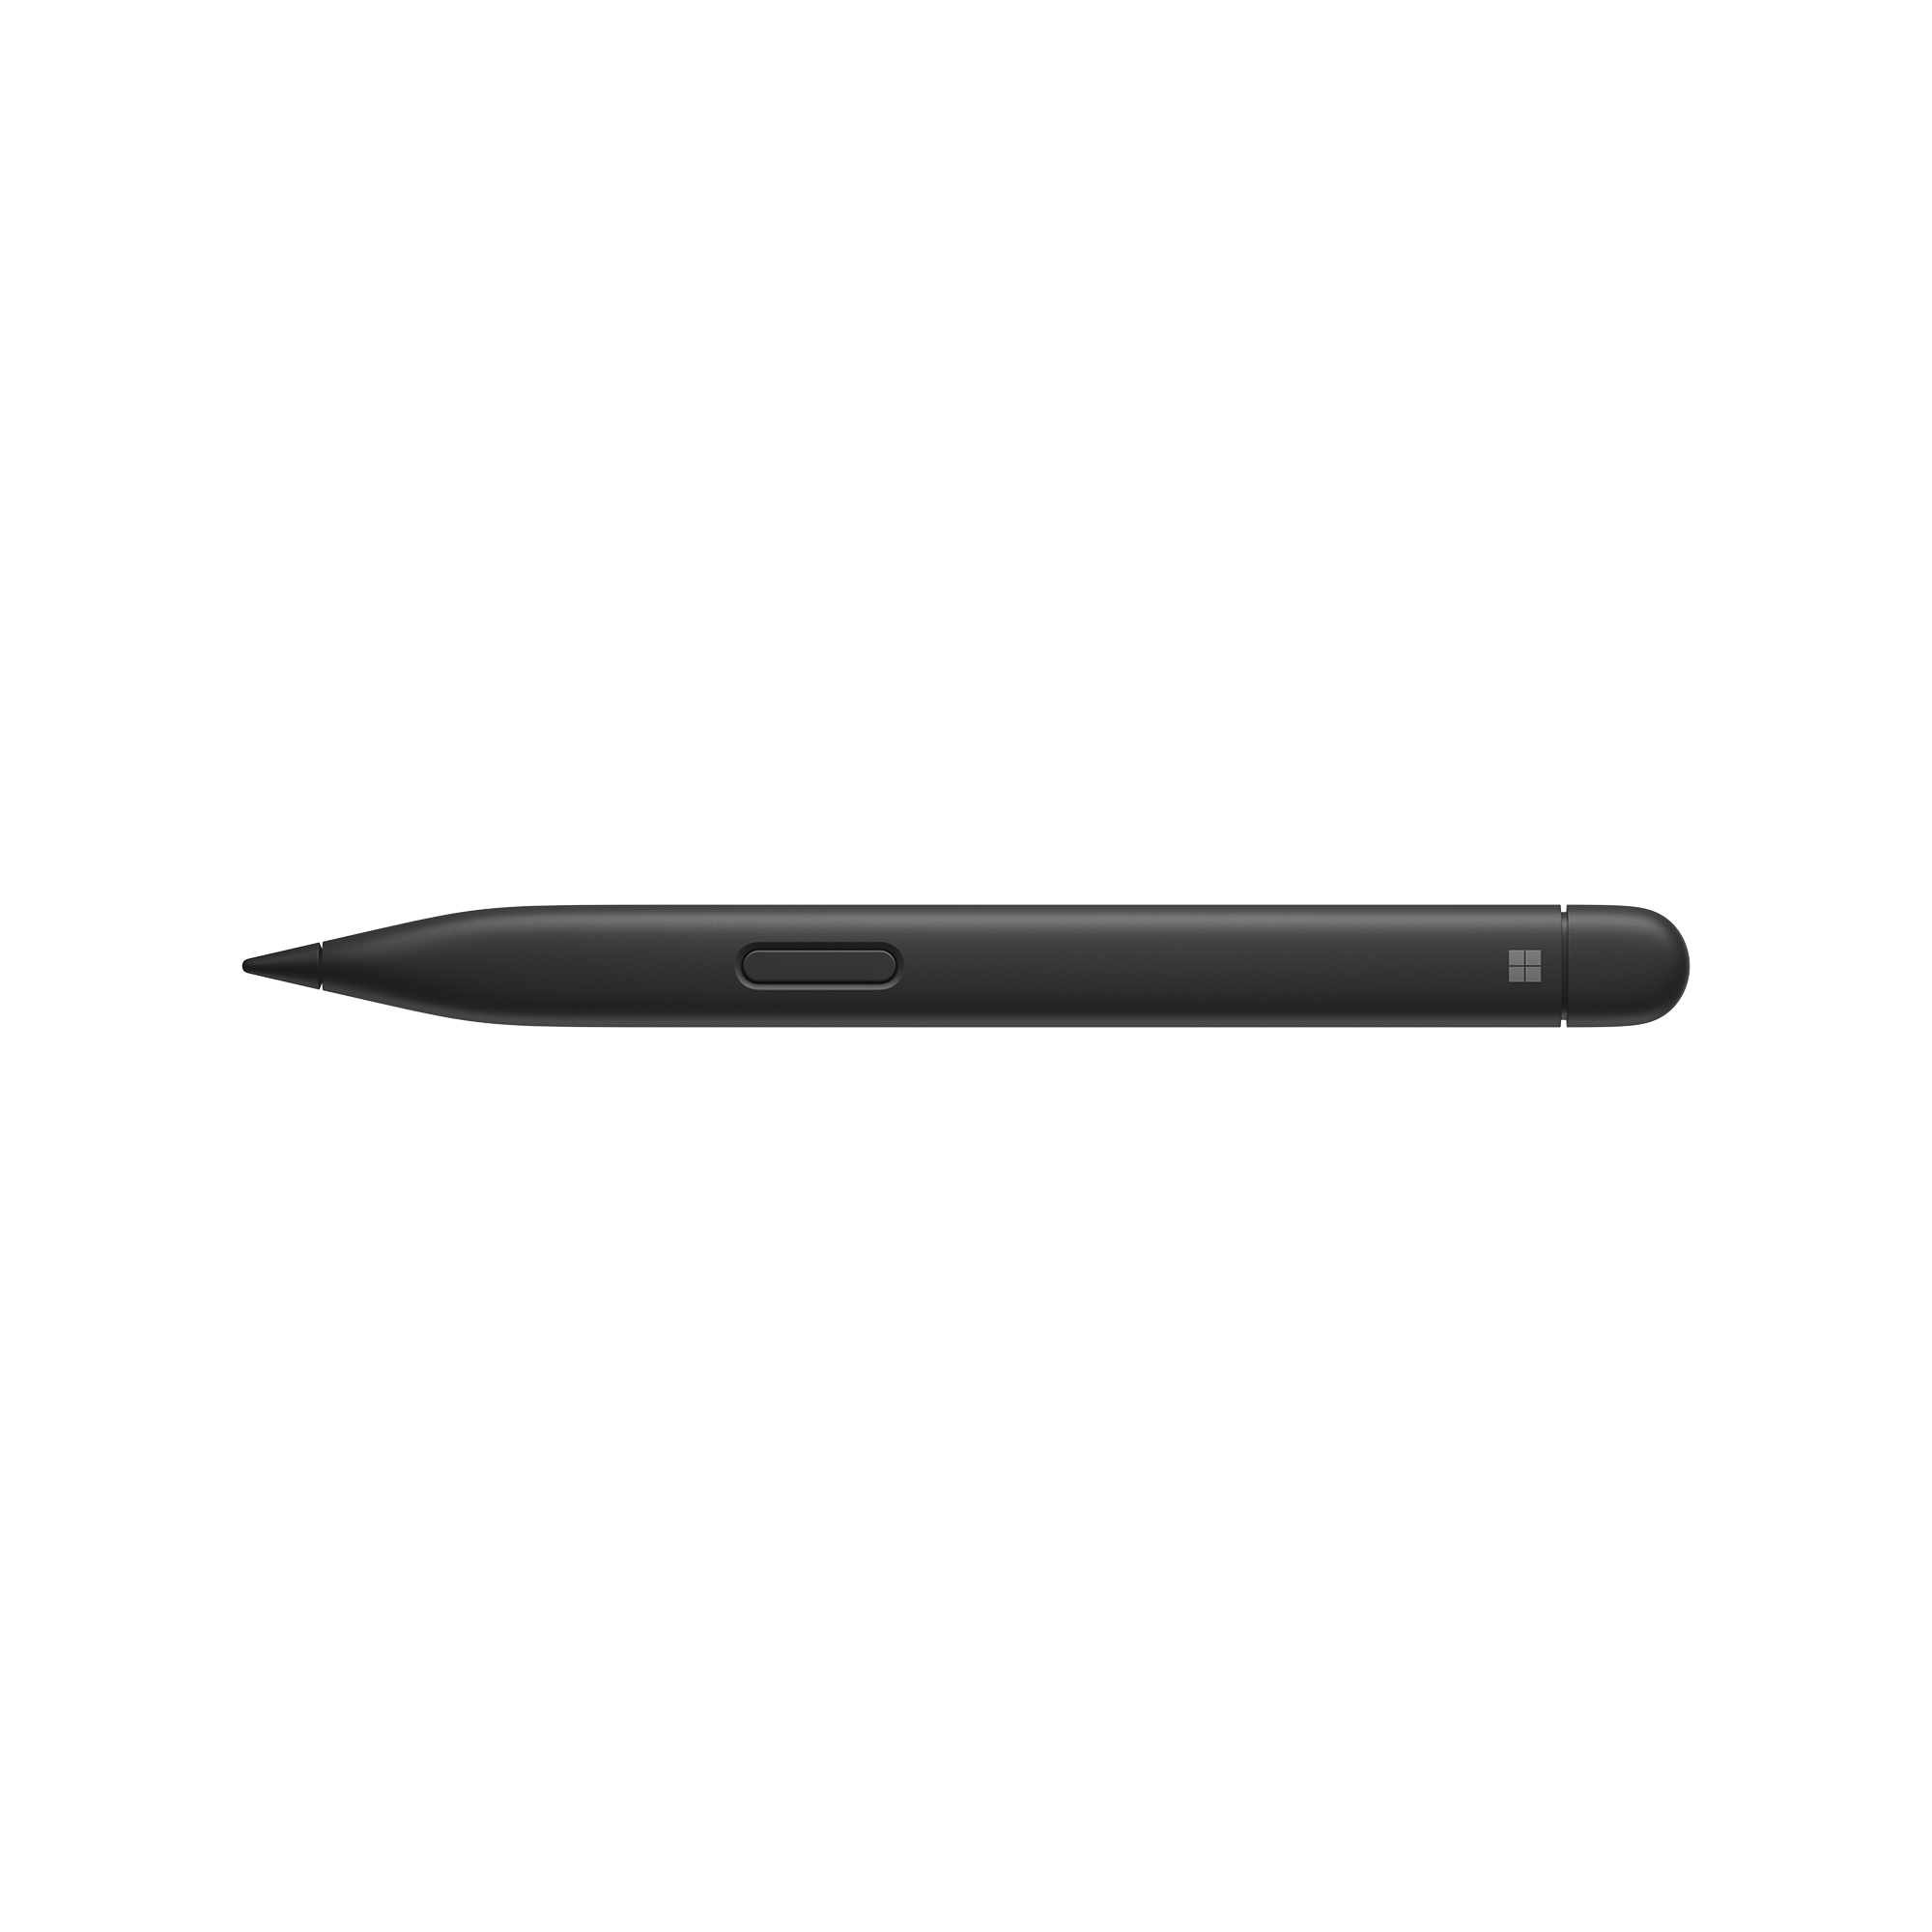 Keyboard Black 2 Signature with 8X6-00001 Microsoft Pen Pro - Slim Surface